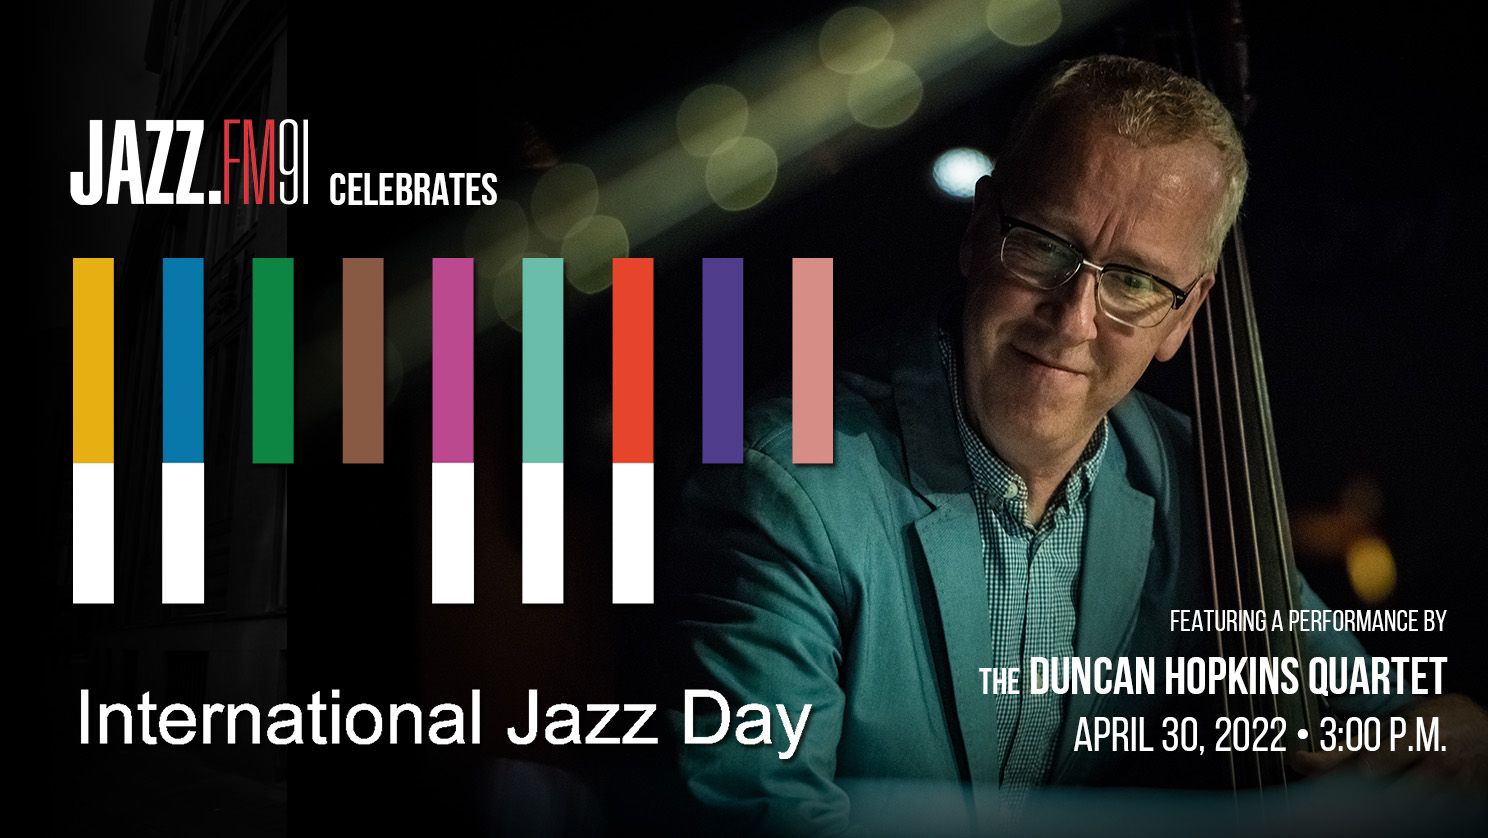 JAZZ.FM91 celebrates International Jazz Day with the Duncan Hopkins Quartet